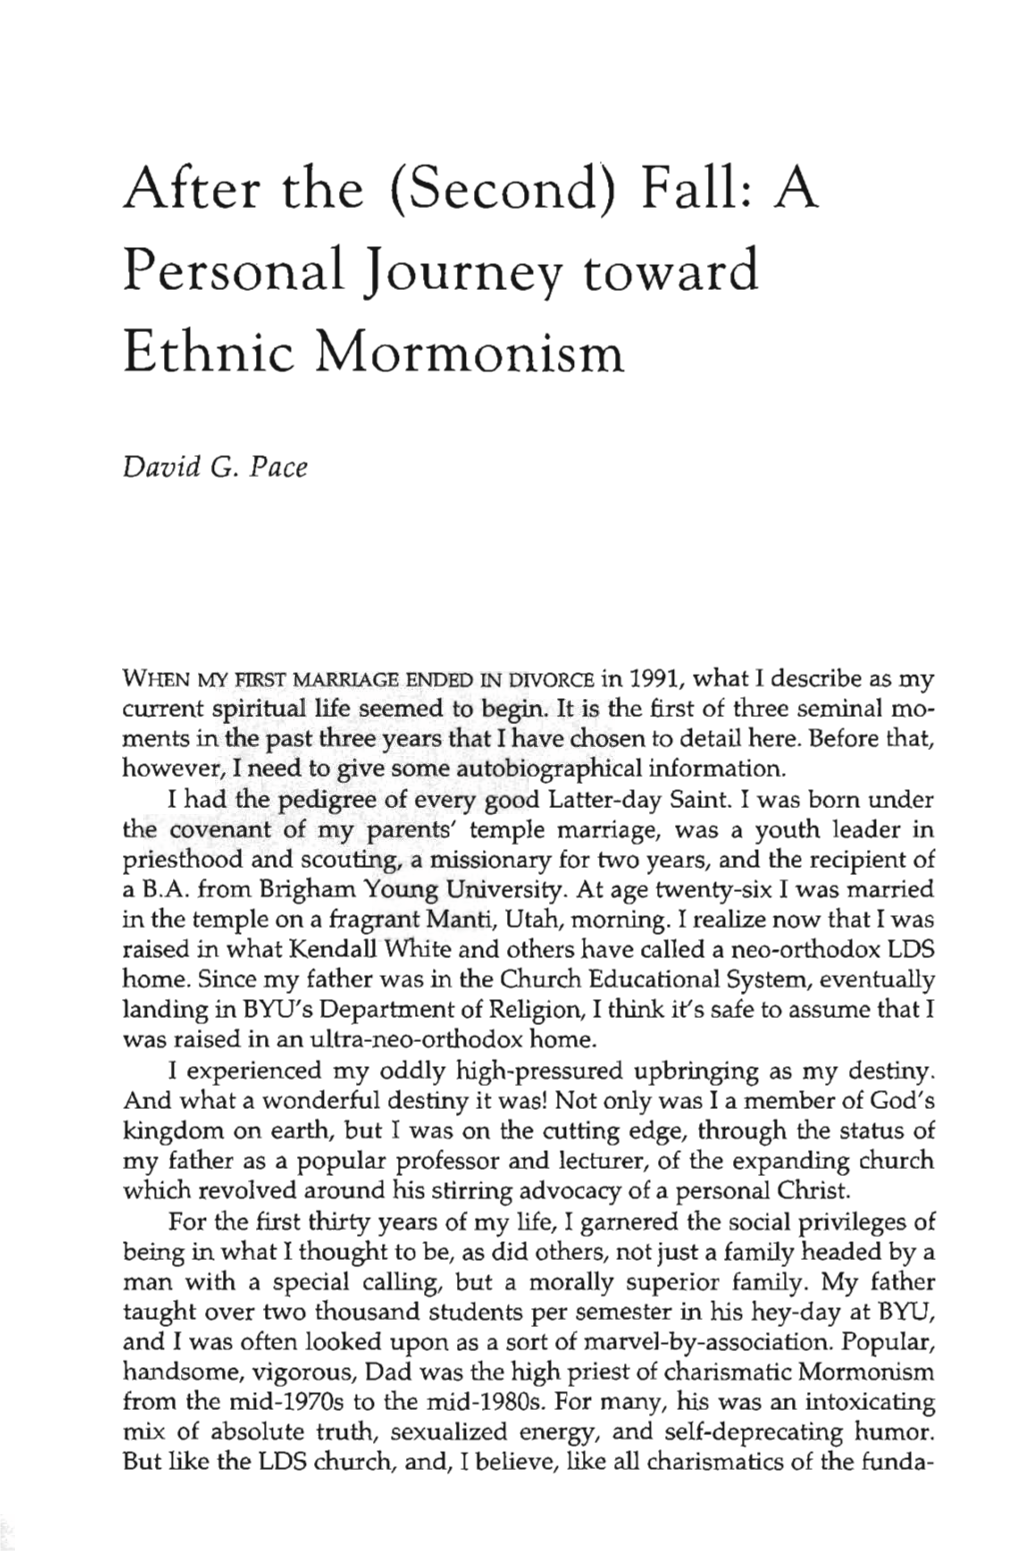 A Personal Journey Toward Ethnic Mormonism